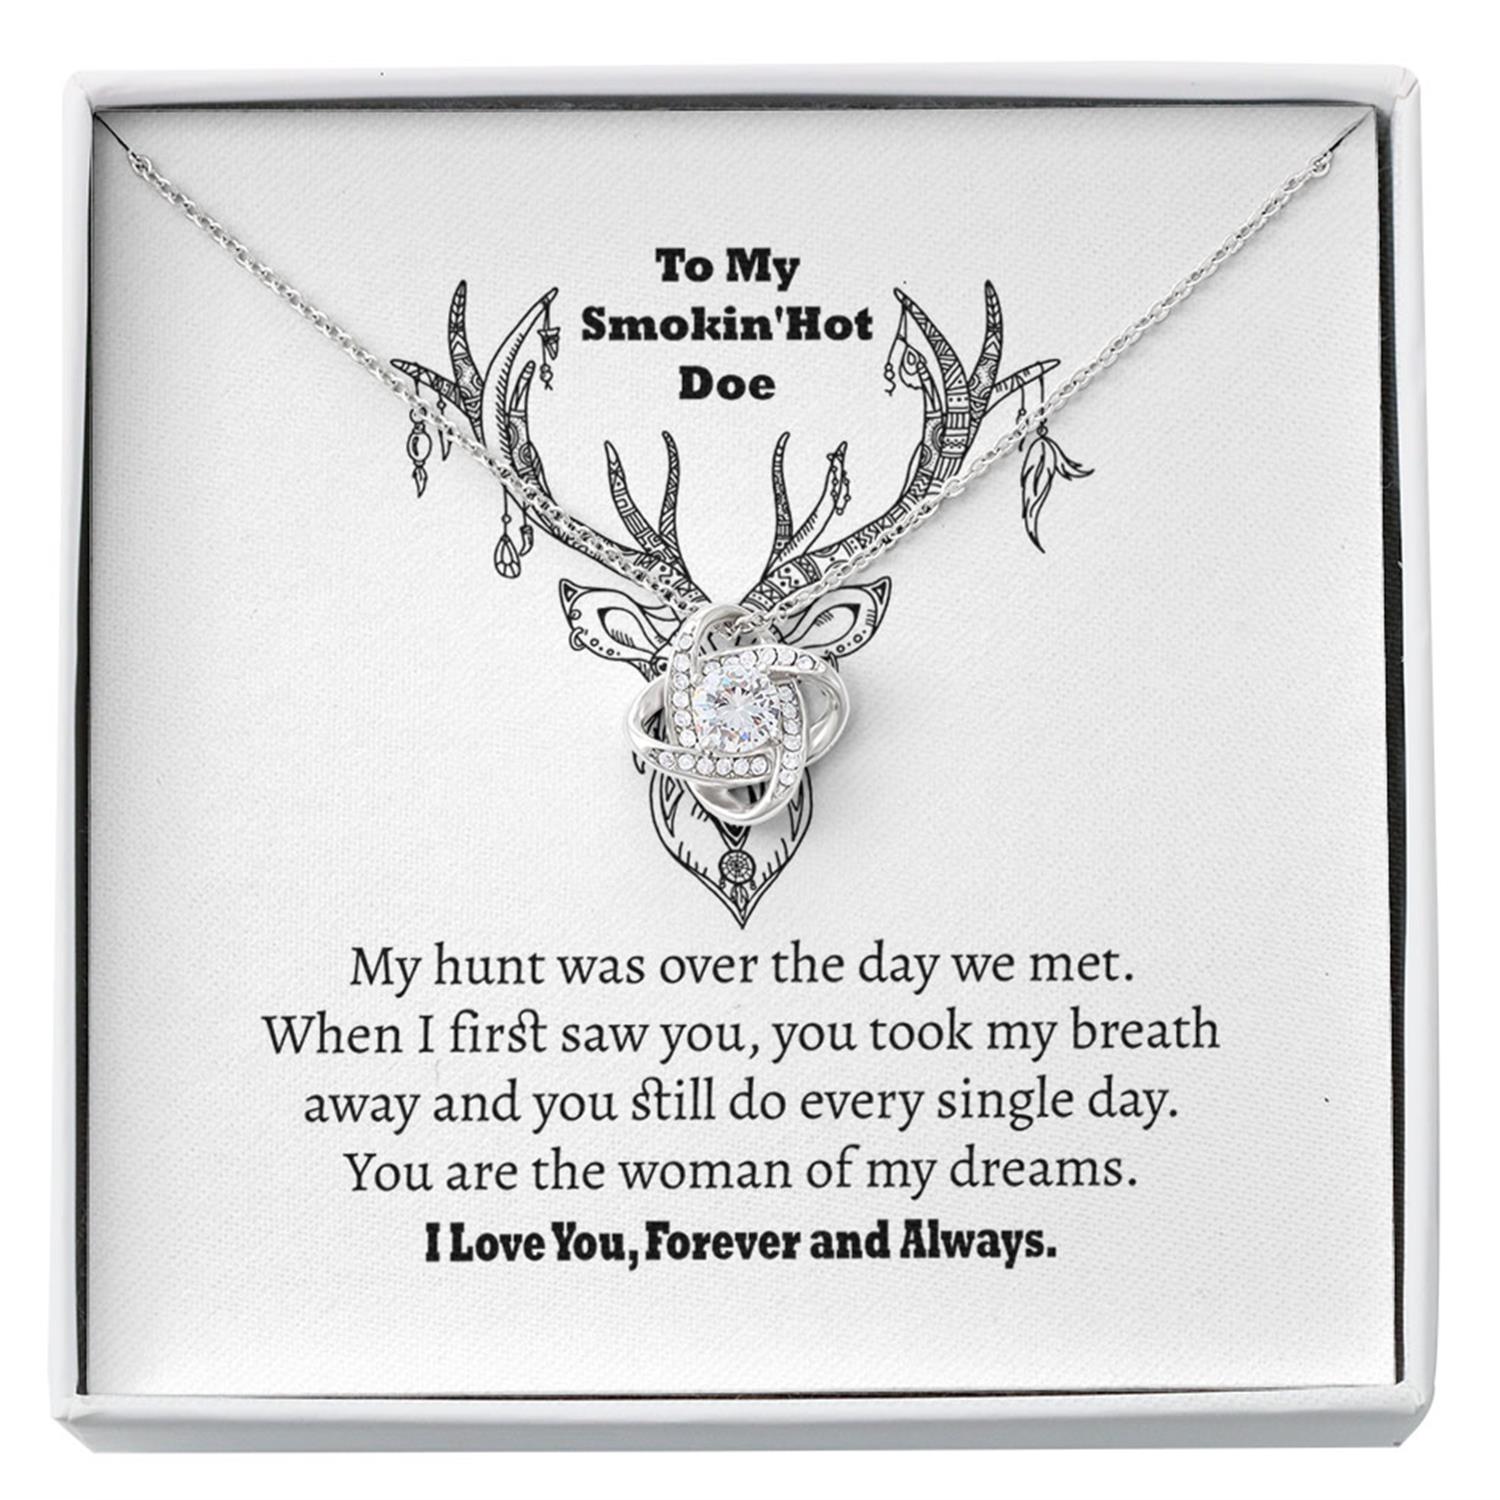 To My Smokin' Hot Doe "Dreams" Necklace Gift Custom Necklace